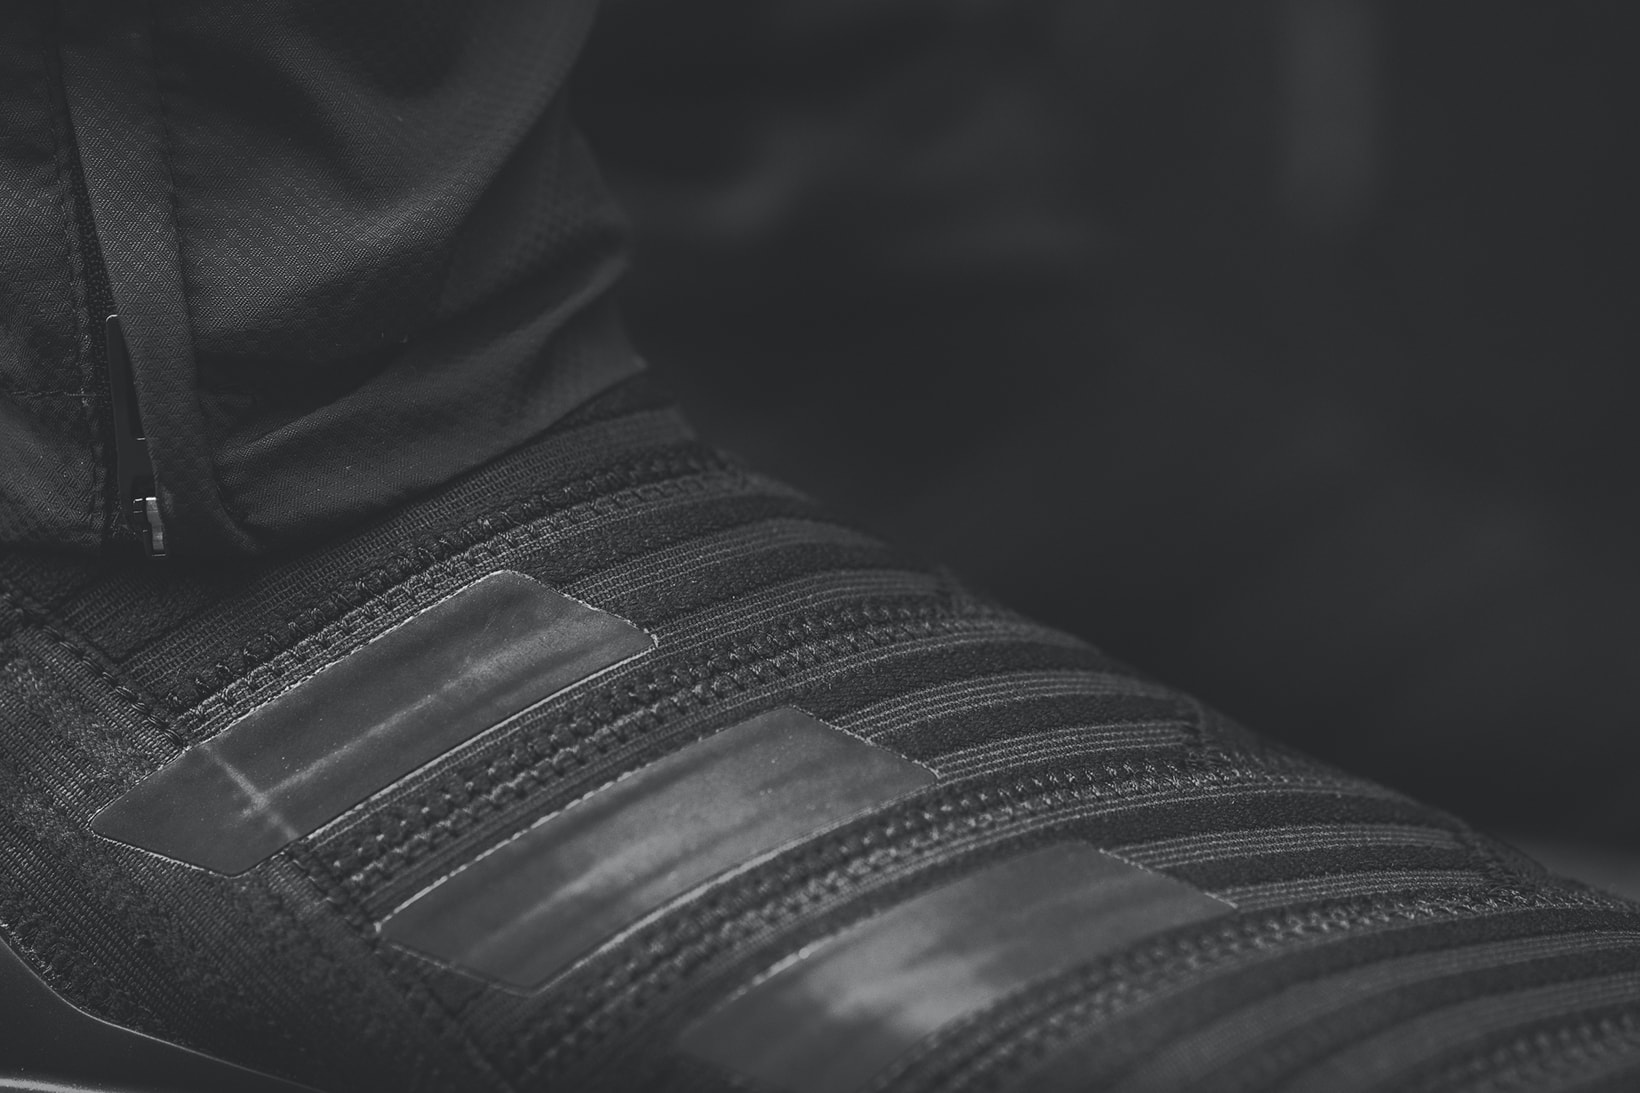 KITH adidas Nemeziz Tango 17 UltraBOOST Closer Look Footwear Black Soccer Release Date Info Drops November 3 2017